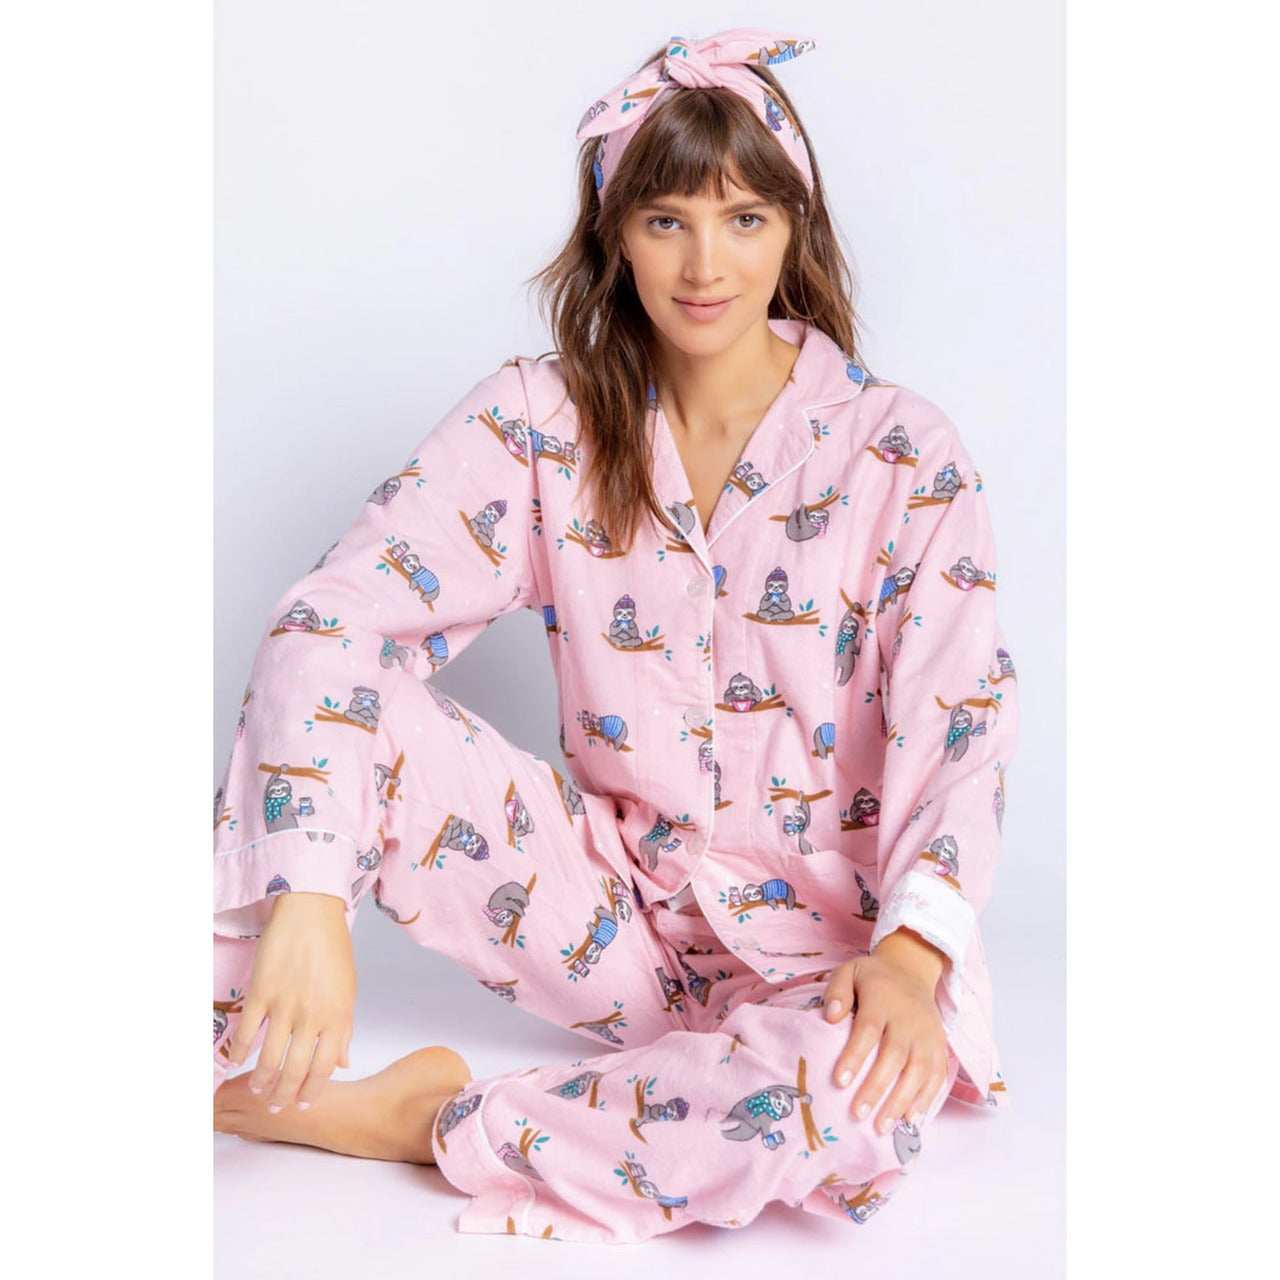 Women's Flannel PJ Set - Pink Sloths